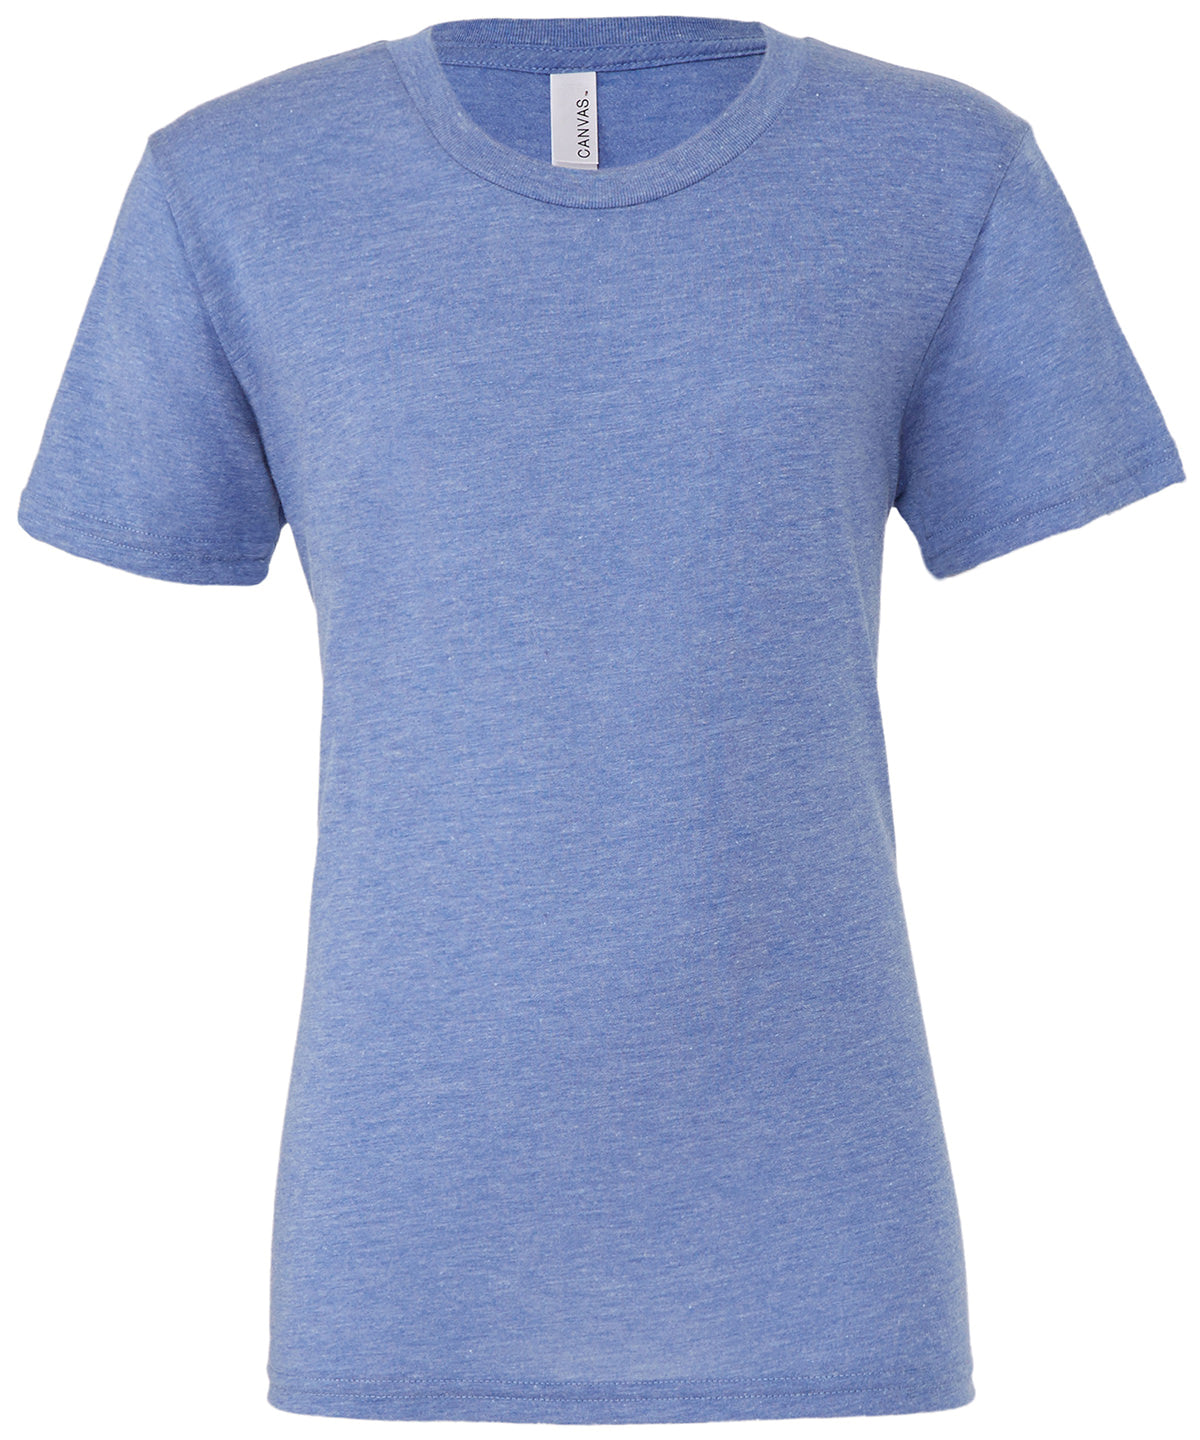 Personalised T-Shirts - Heather Grey Bella Canvas Unisex triblend crew neck t-shirt